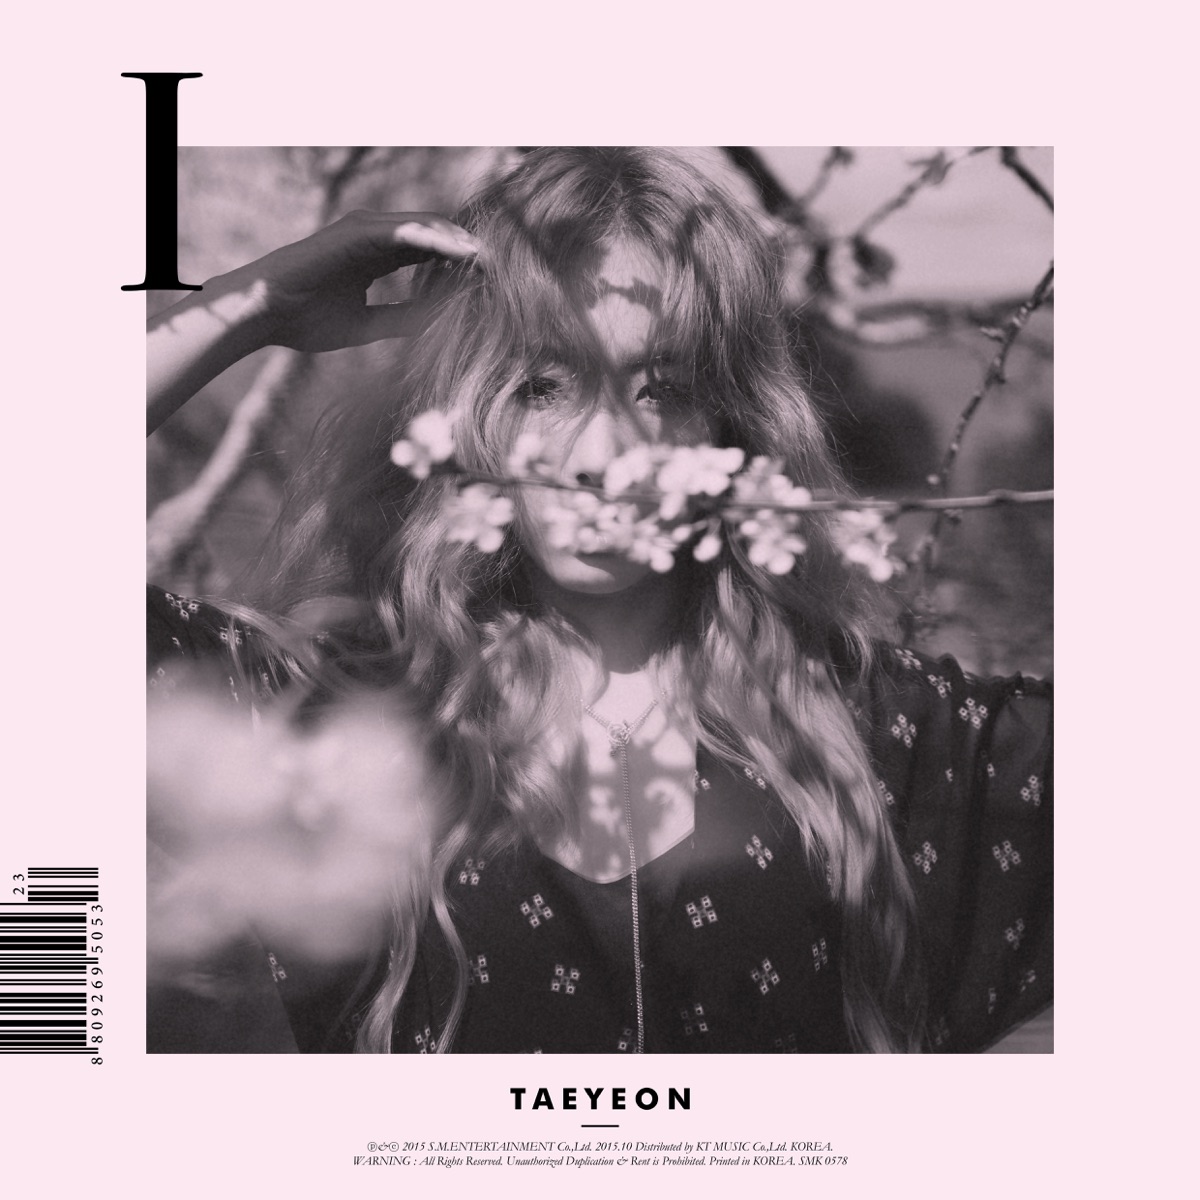 TAEYEON – I – The 1st Mini Album